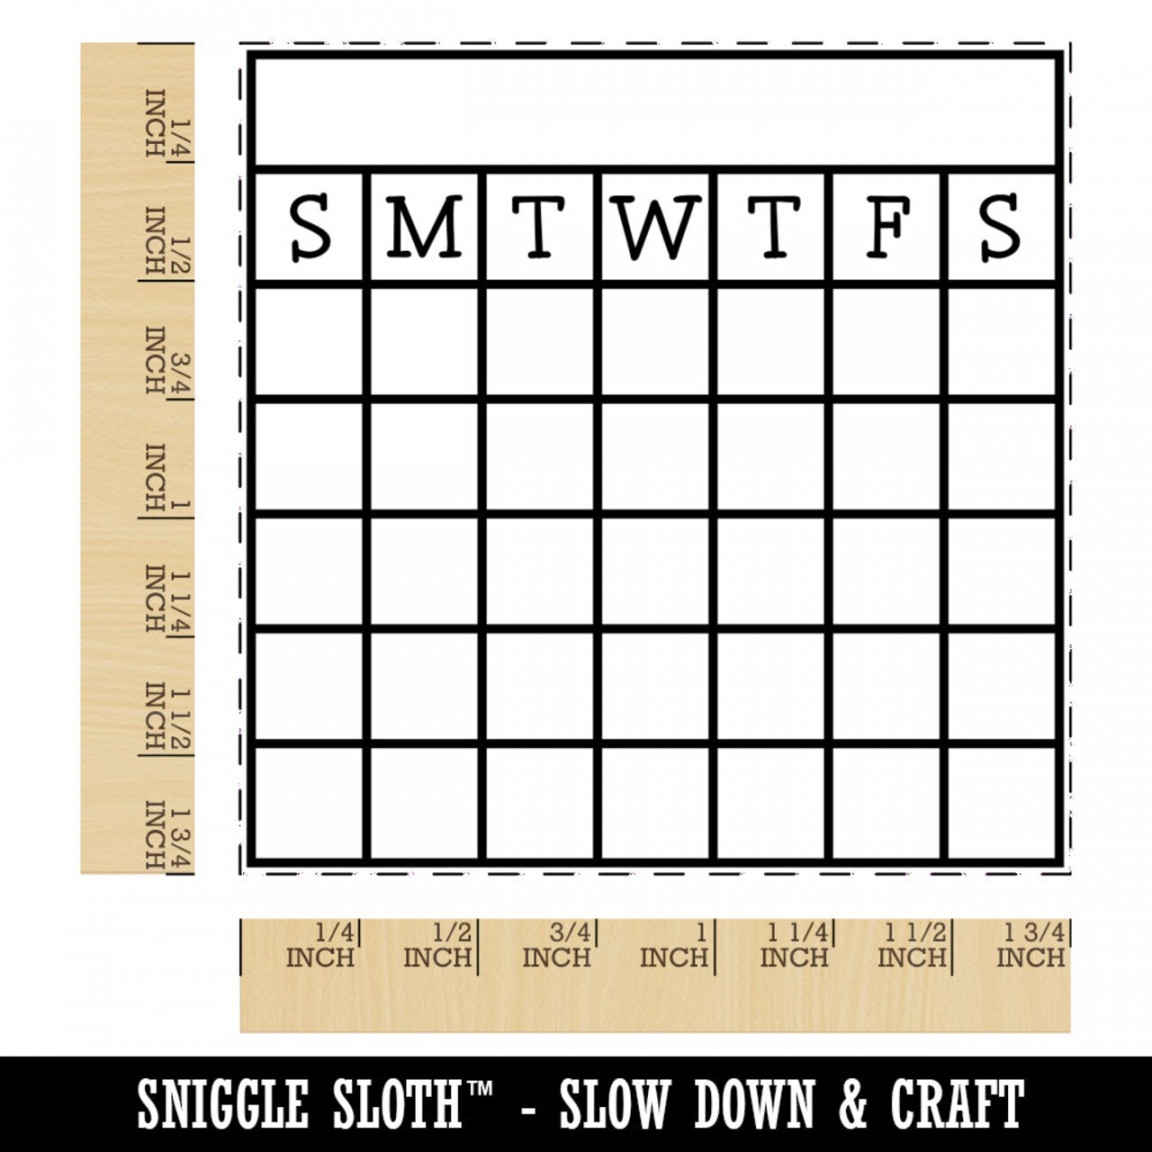 Blank Calendar Goal Habit Tracker Square Rubber Stamp for Stamping